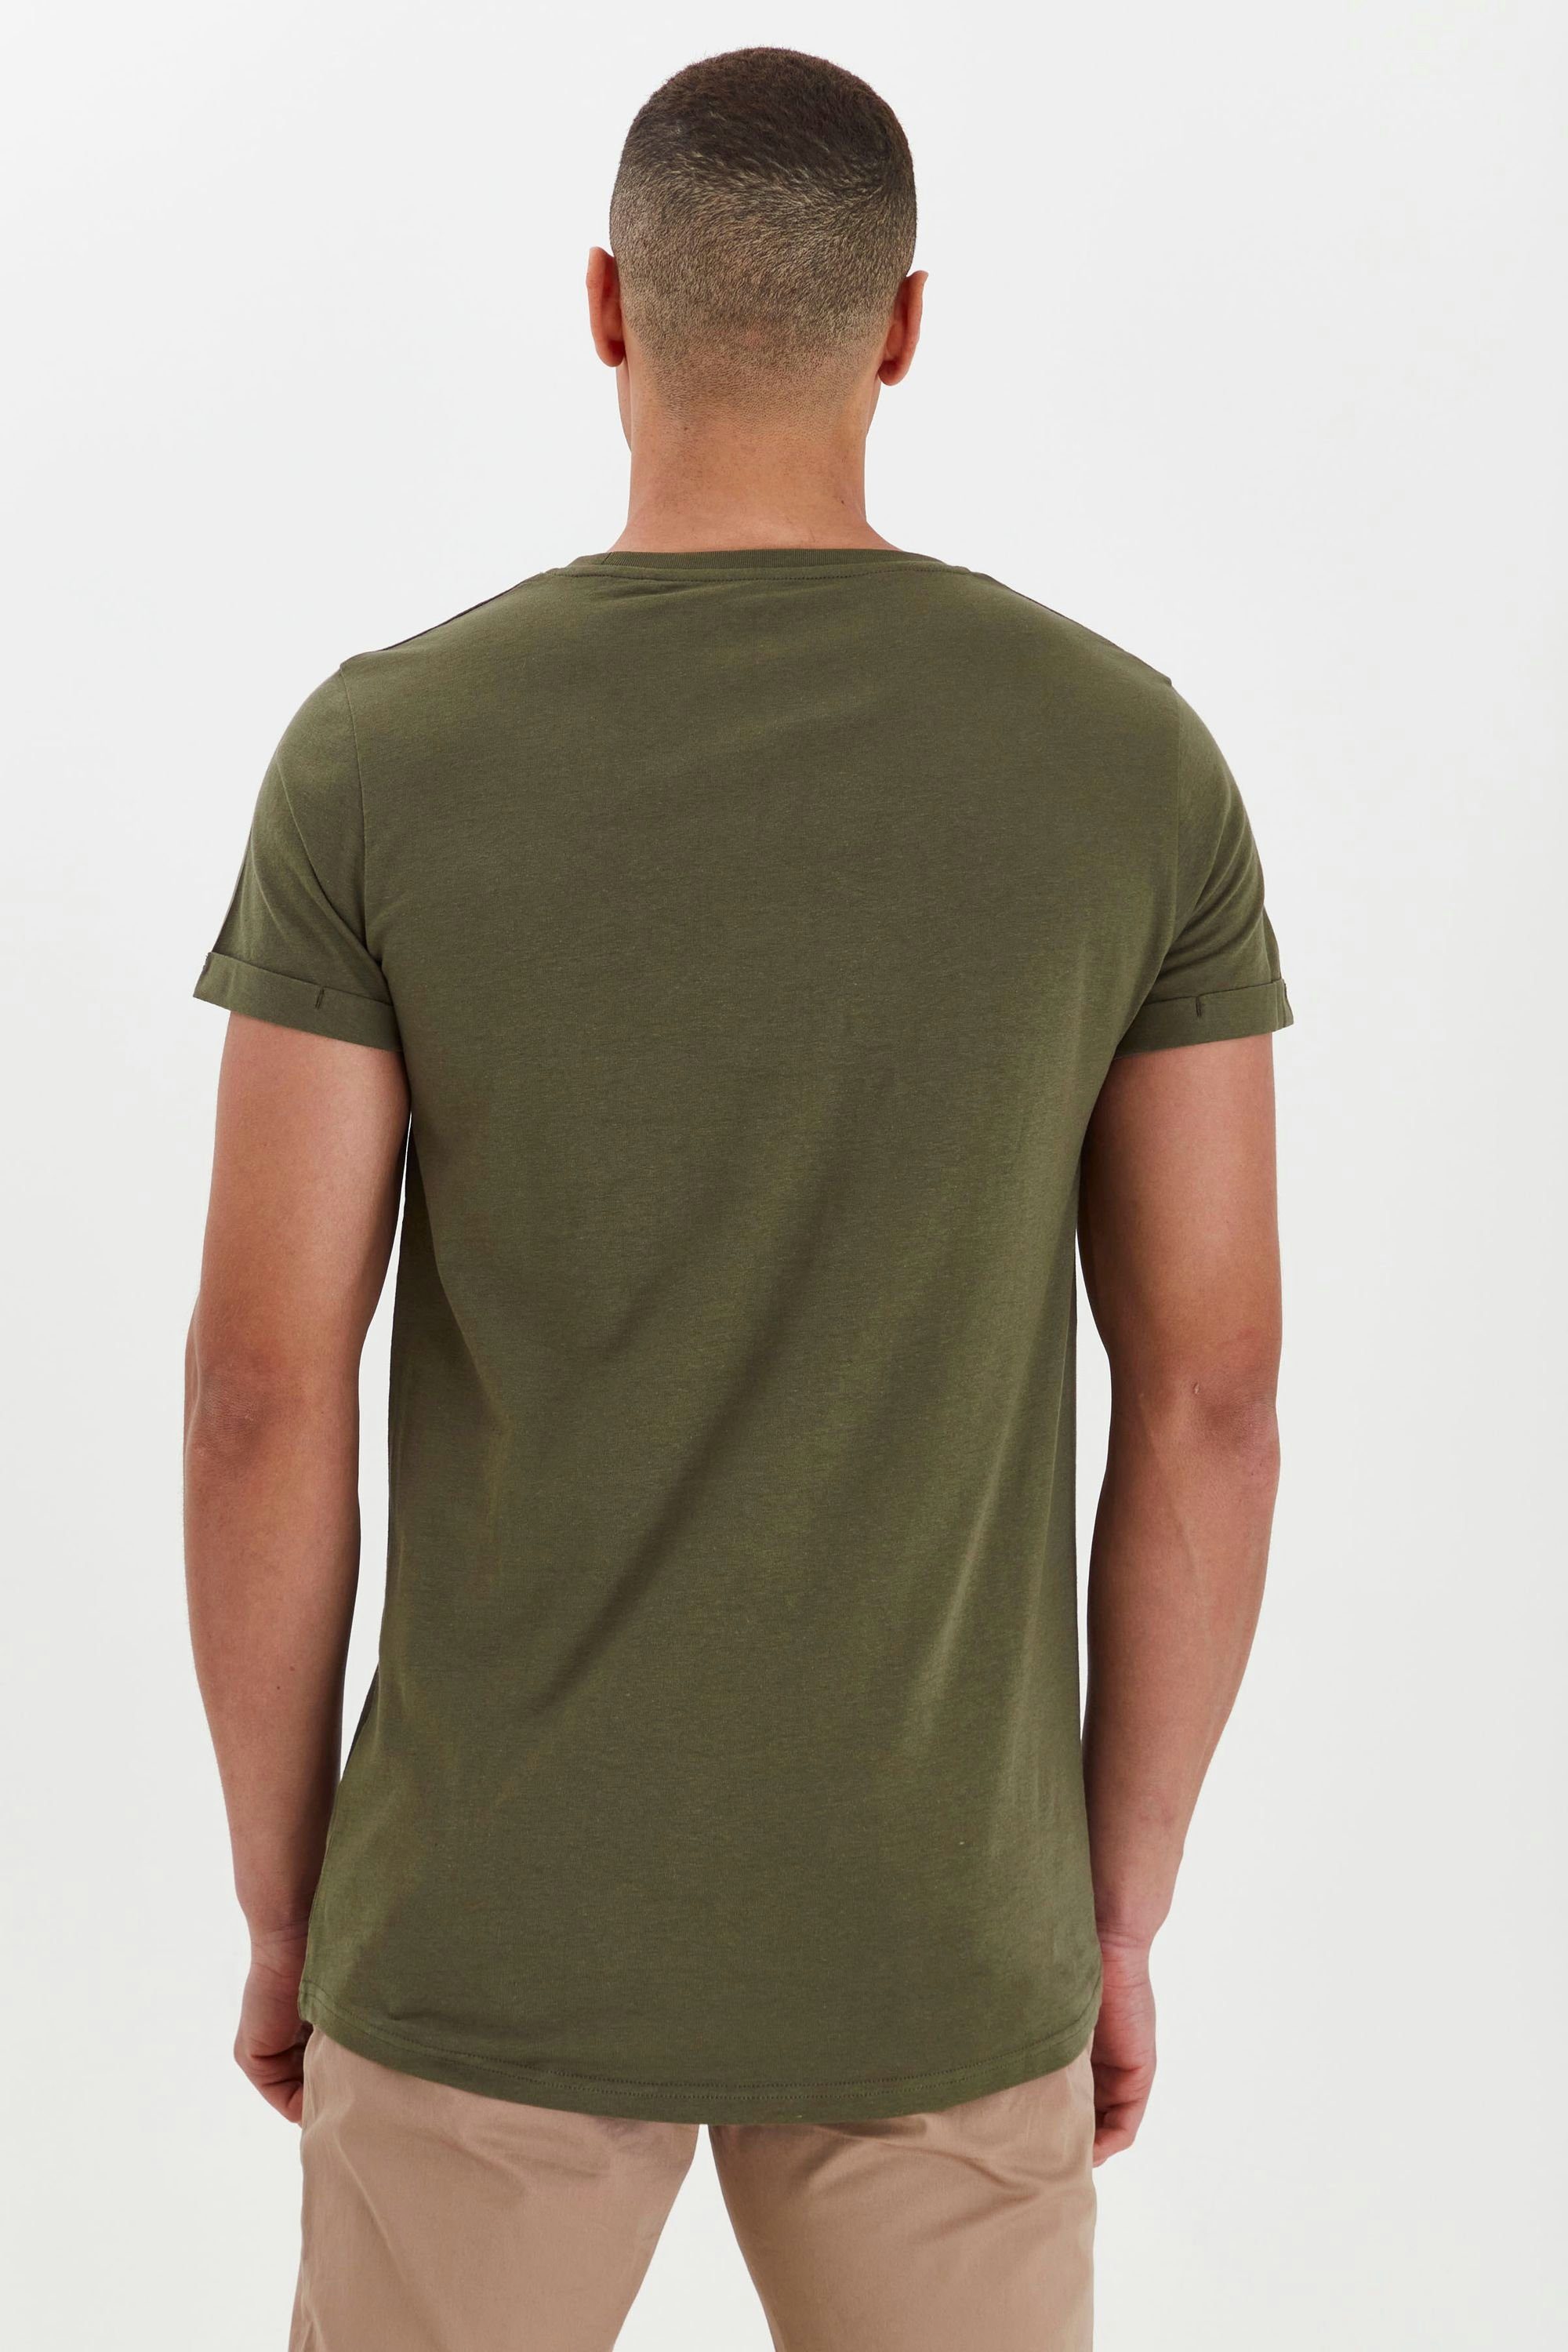 T-Shirt Longshirt !Solid SDLongo (190512) Ivy Green